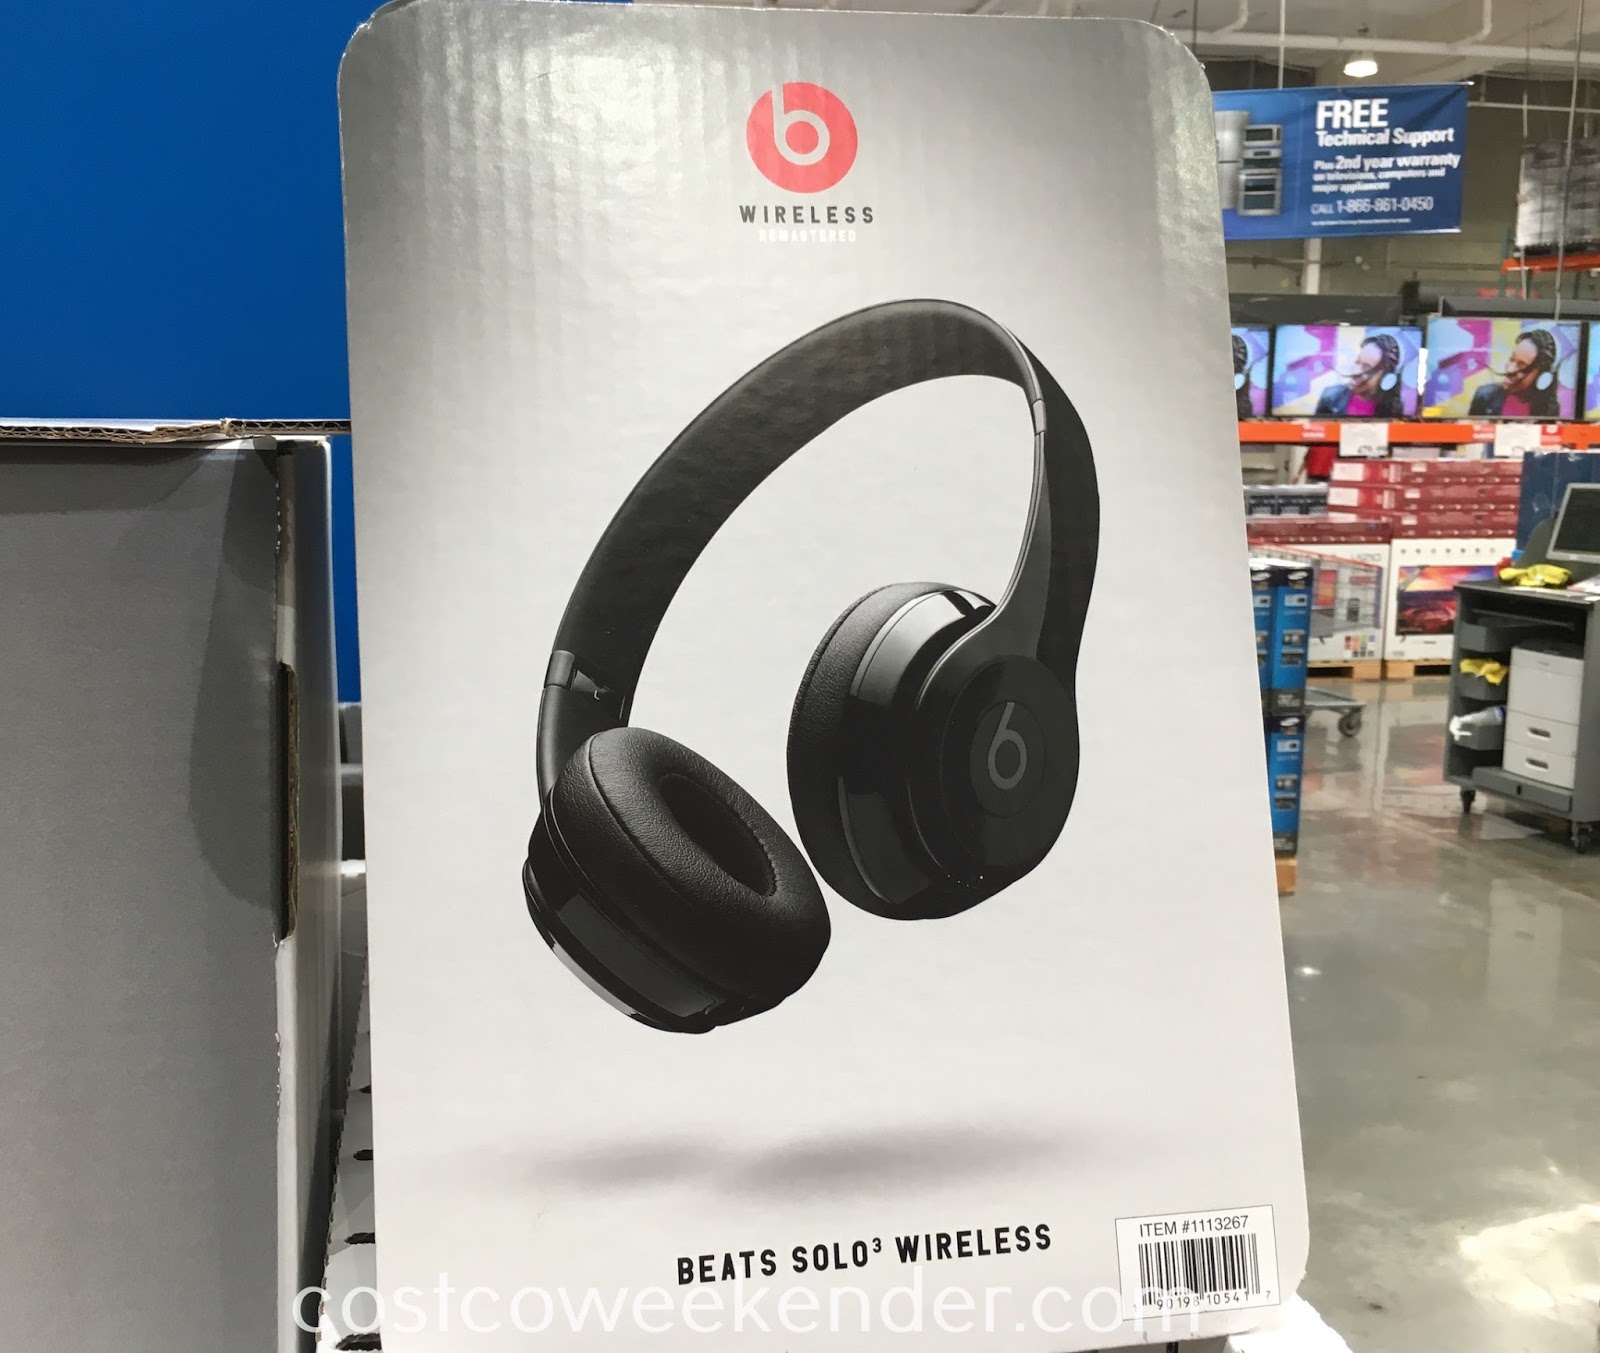 Beats 3 Wireless Bluetooth | Costco Weekender